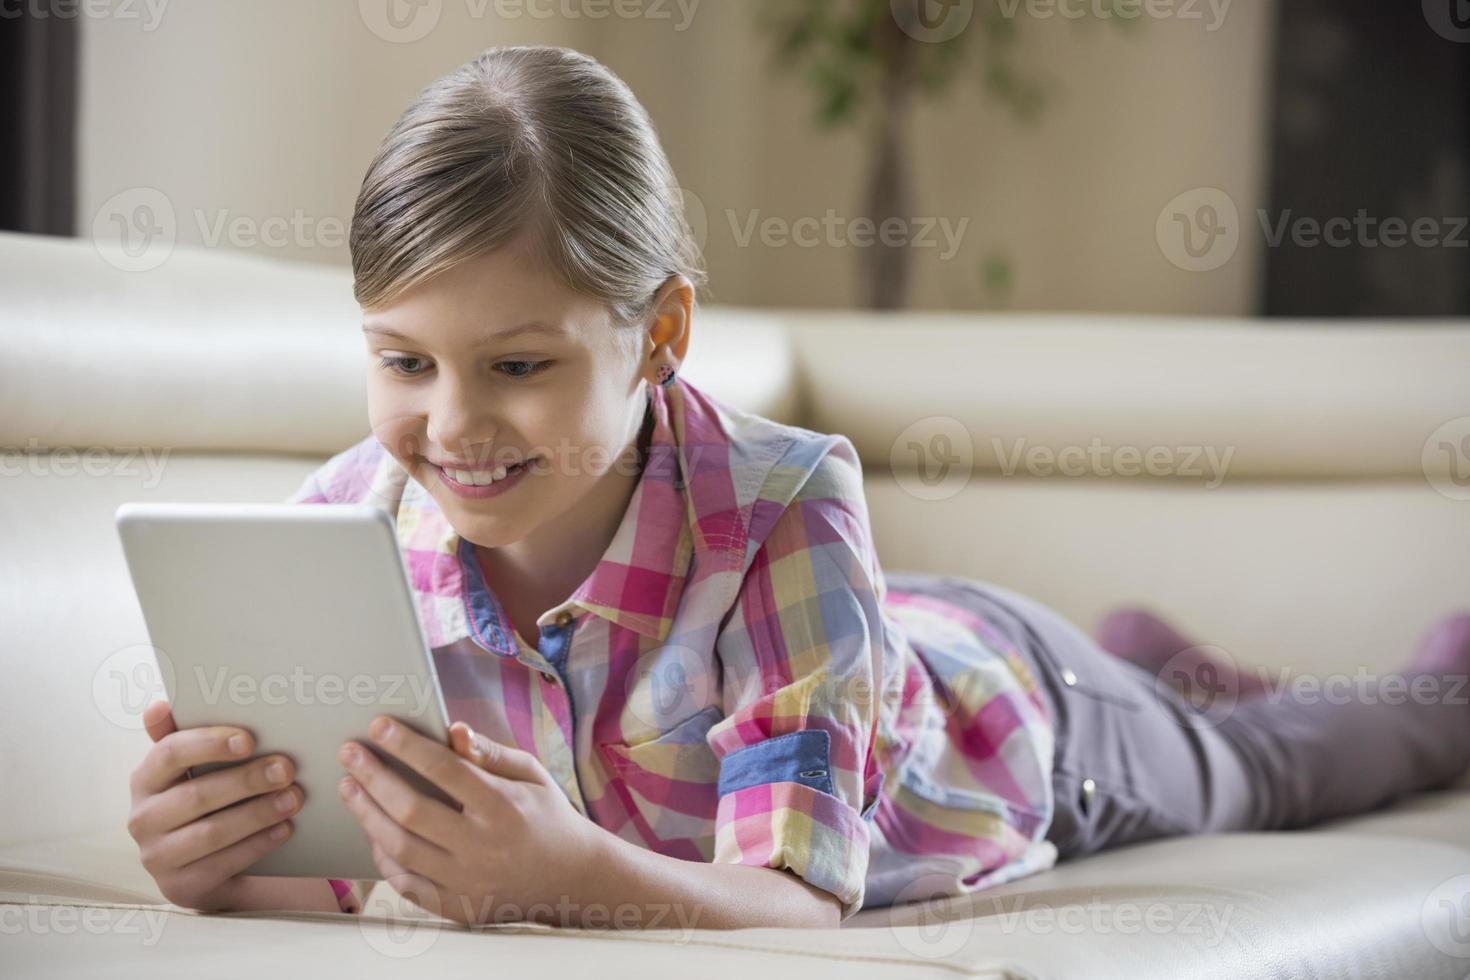 garota sorridente usando tablet pc enquanto estava deitada no sofá foto